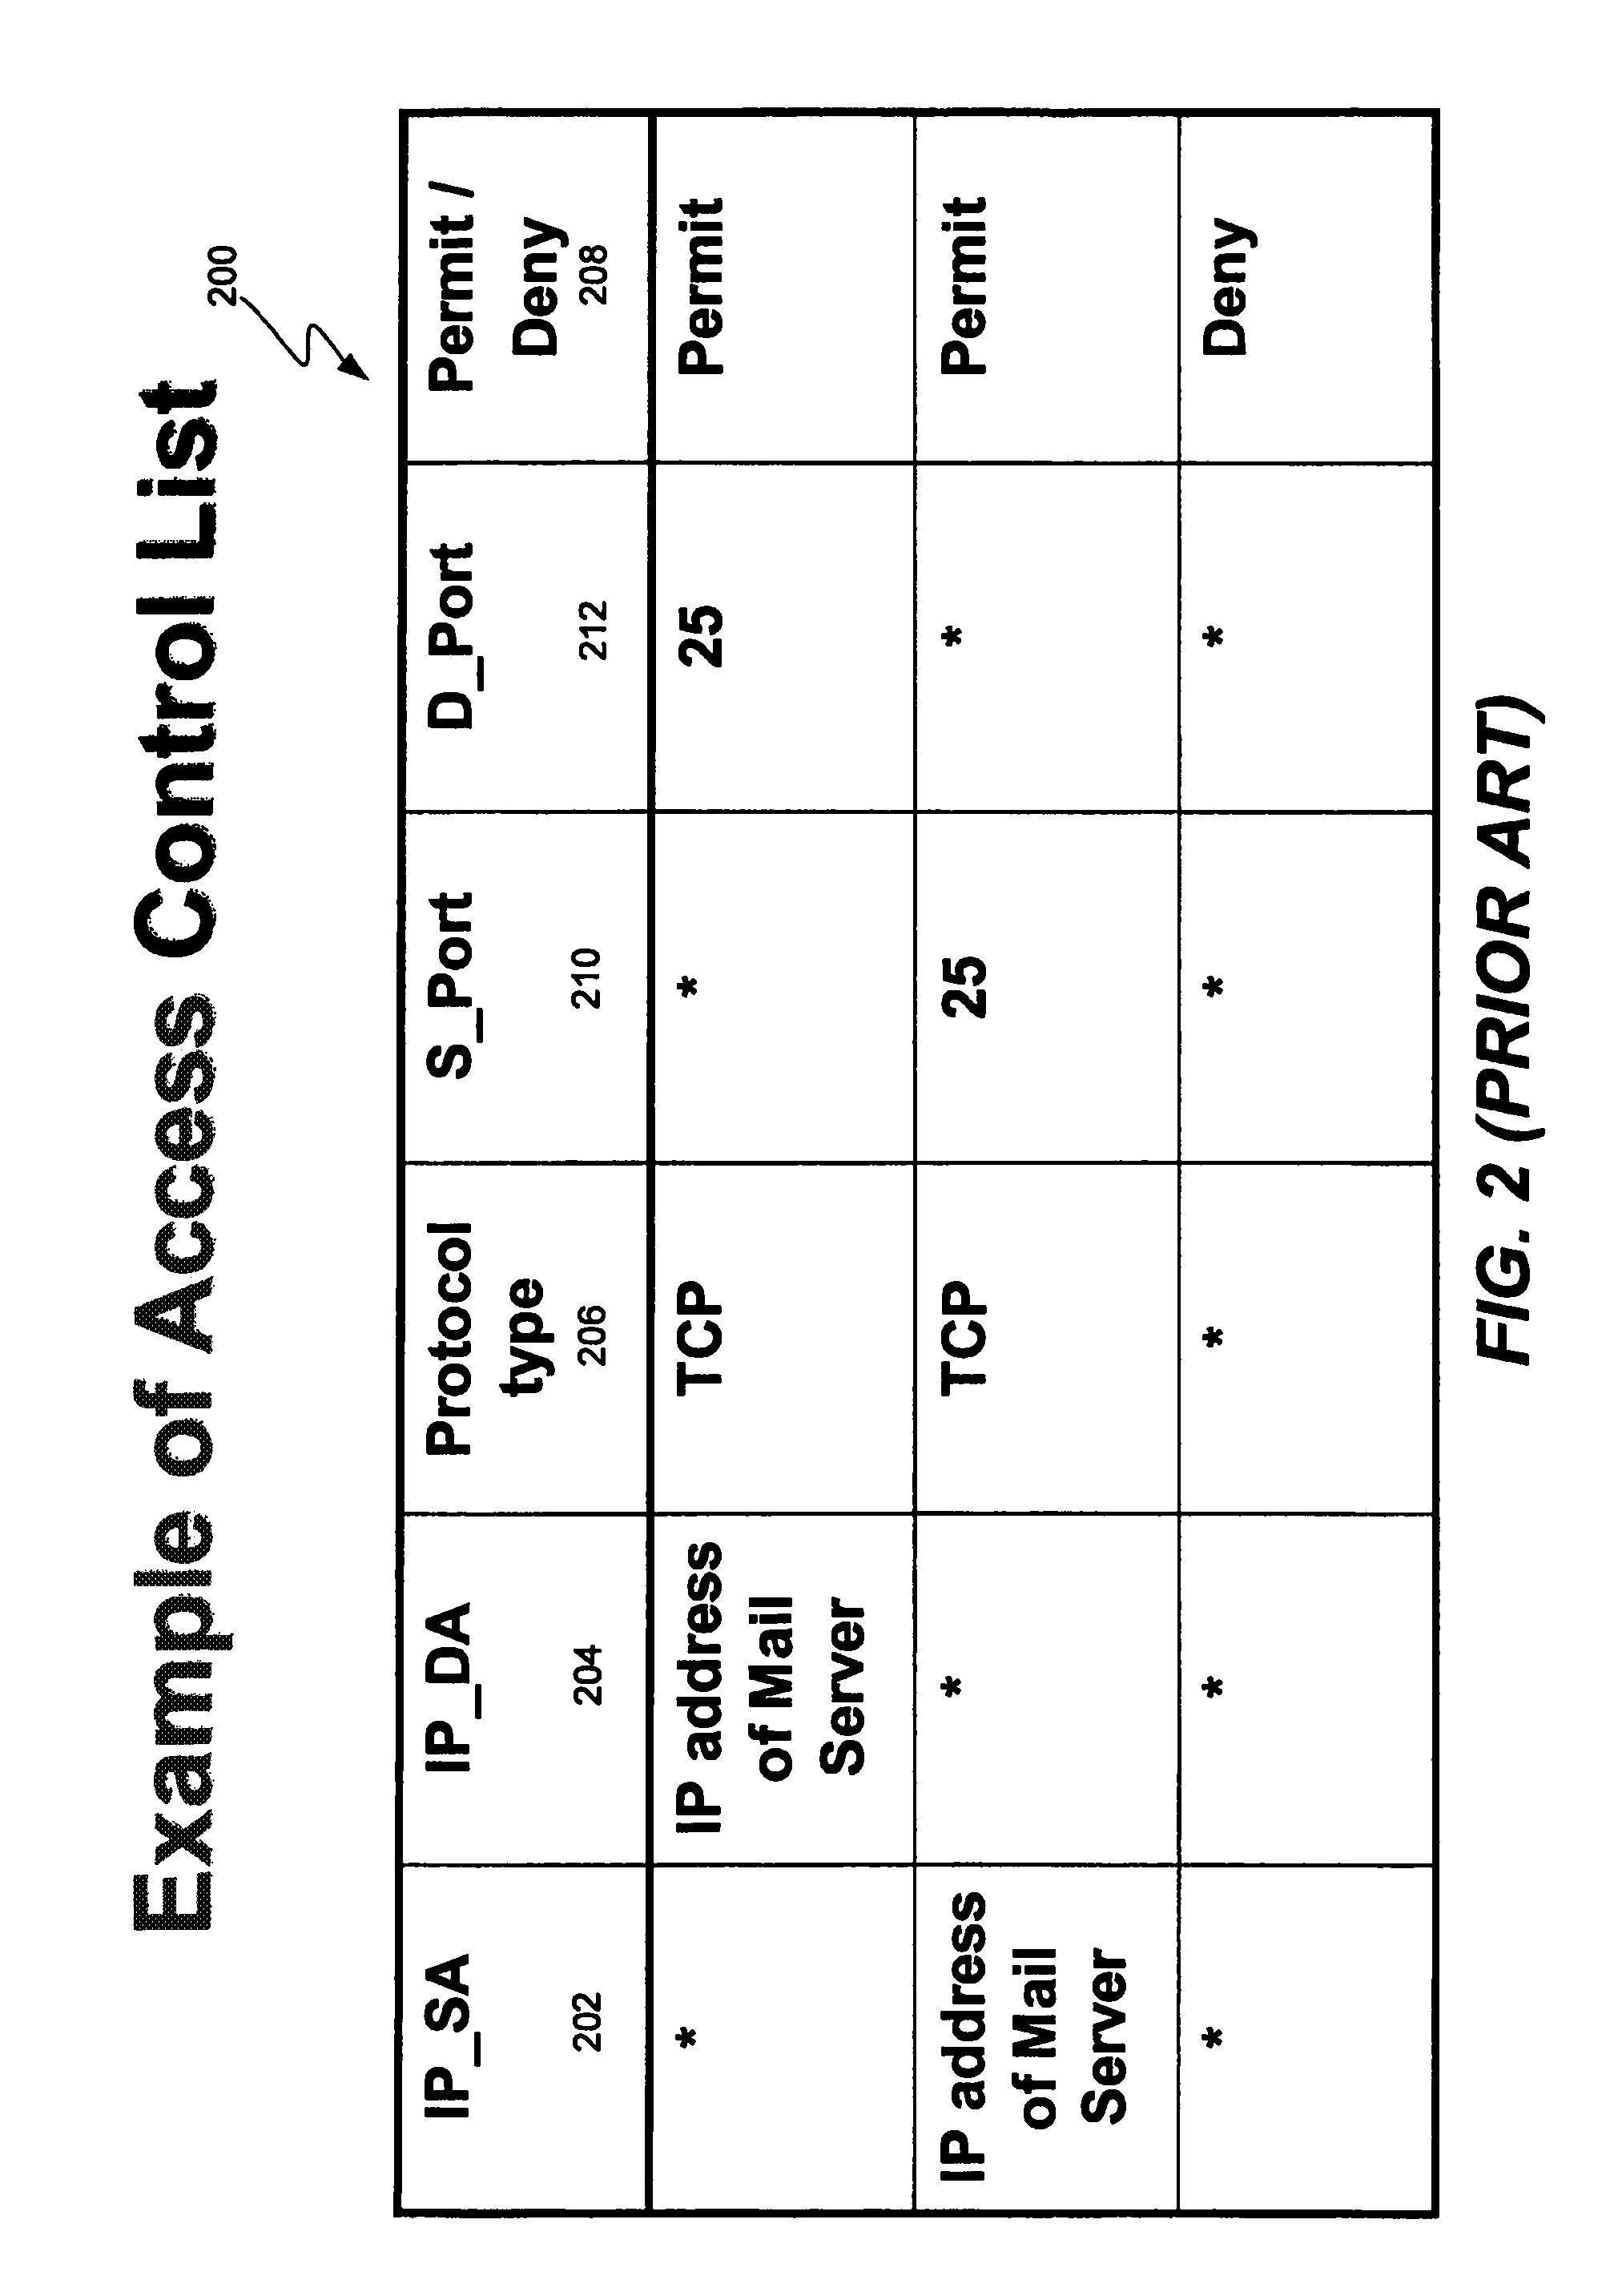 Access list key compression